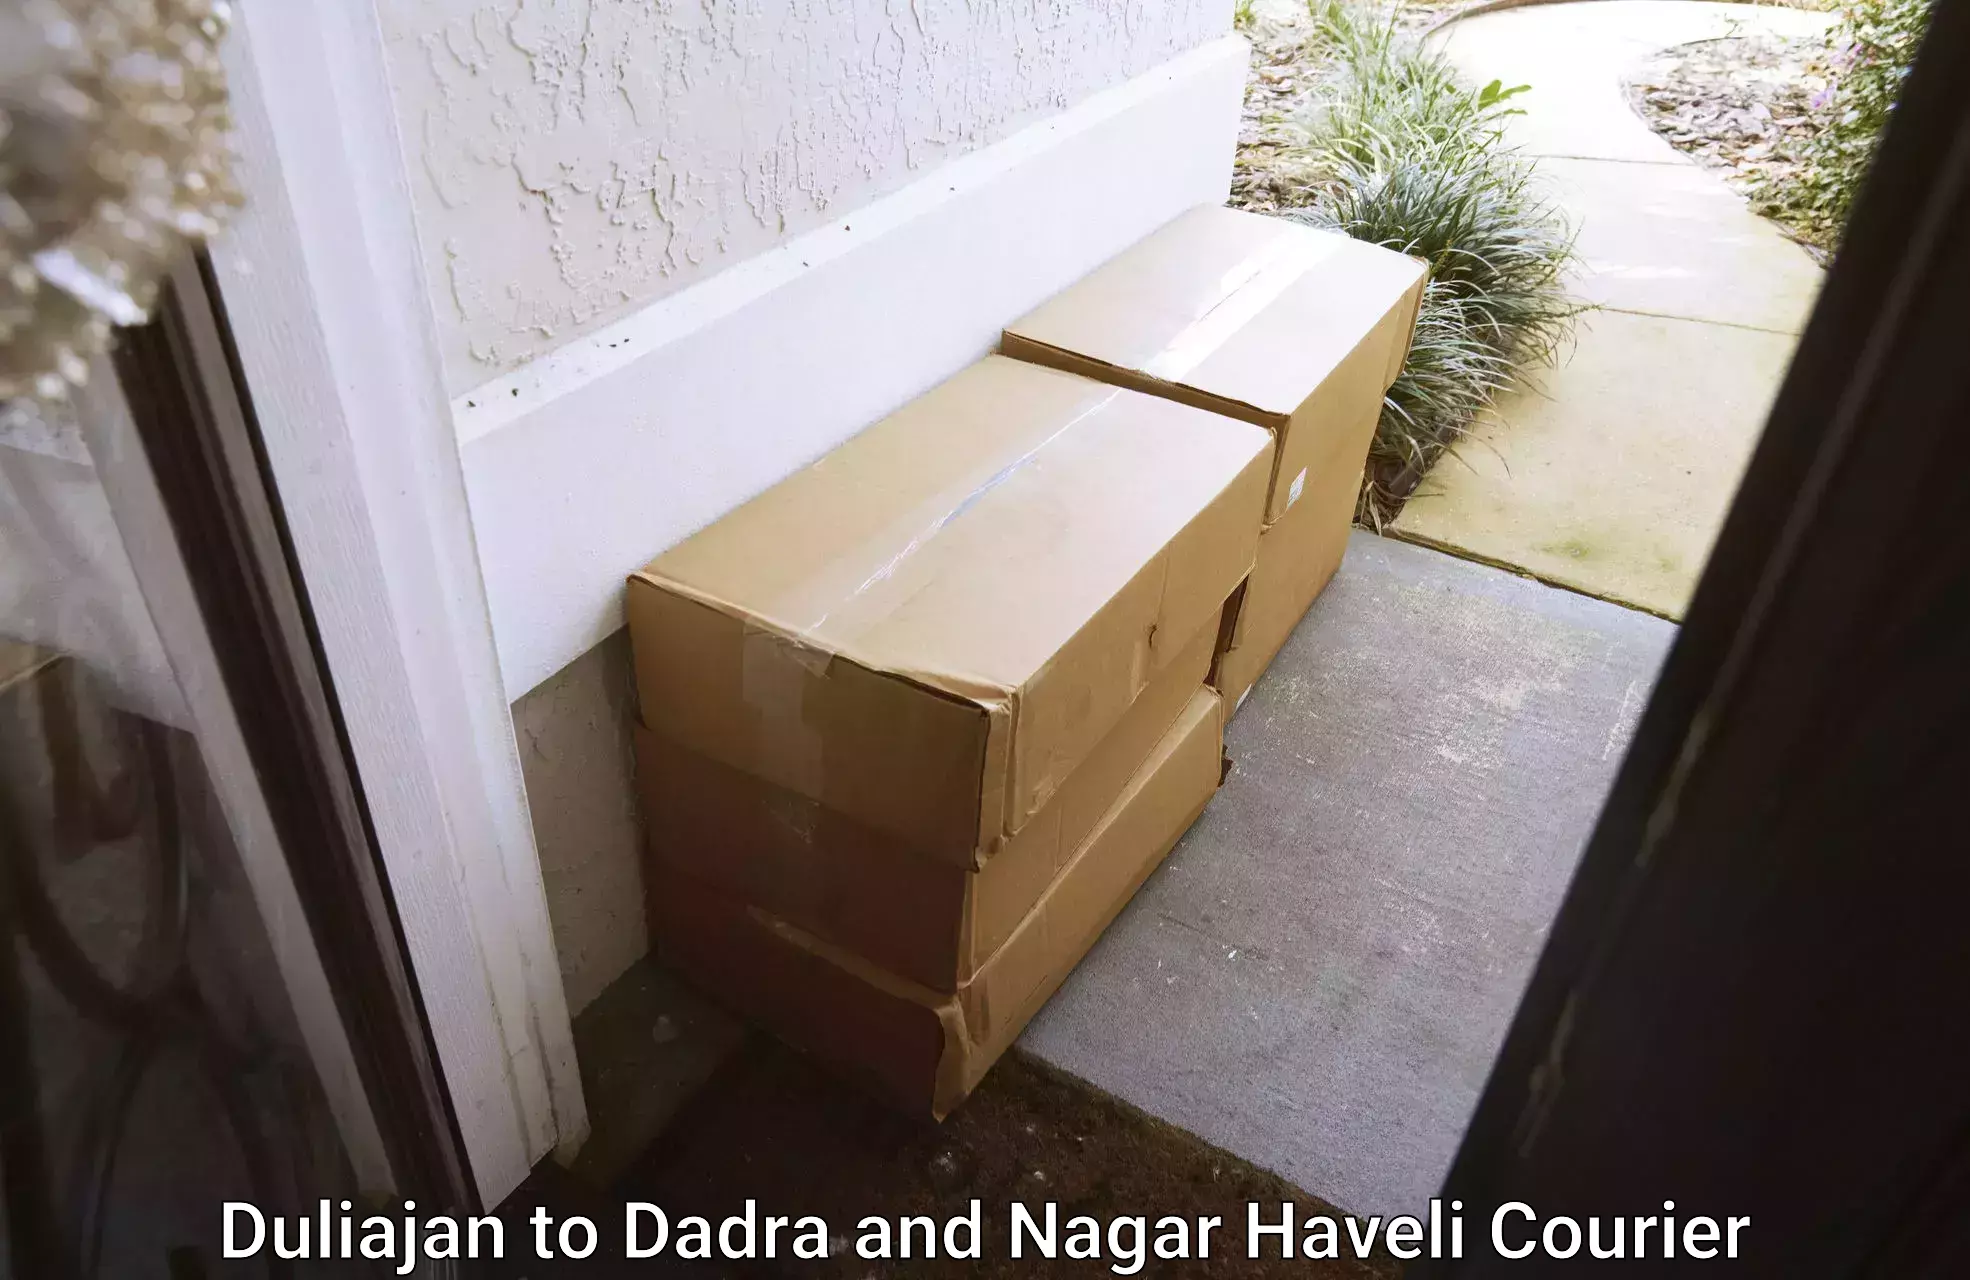 User-friendly delivery service Duliajan to Dadra and Nagar Haveli